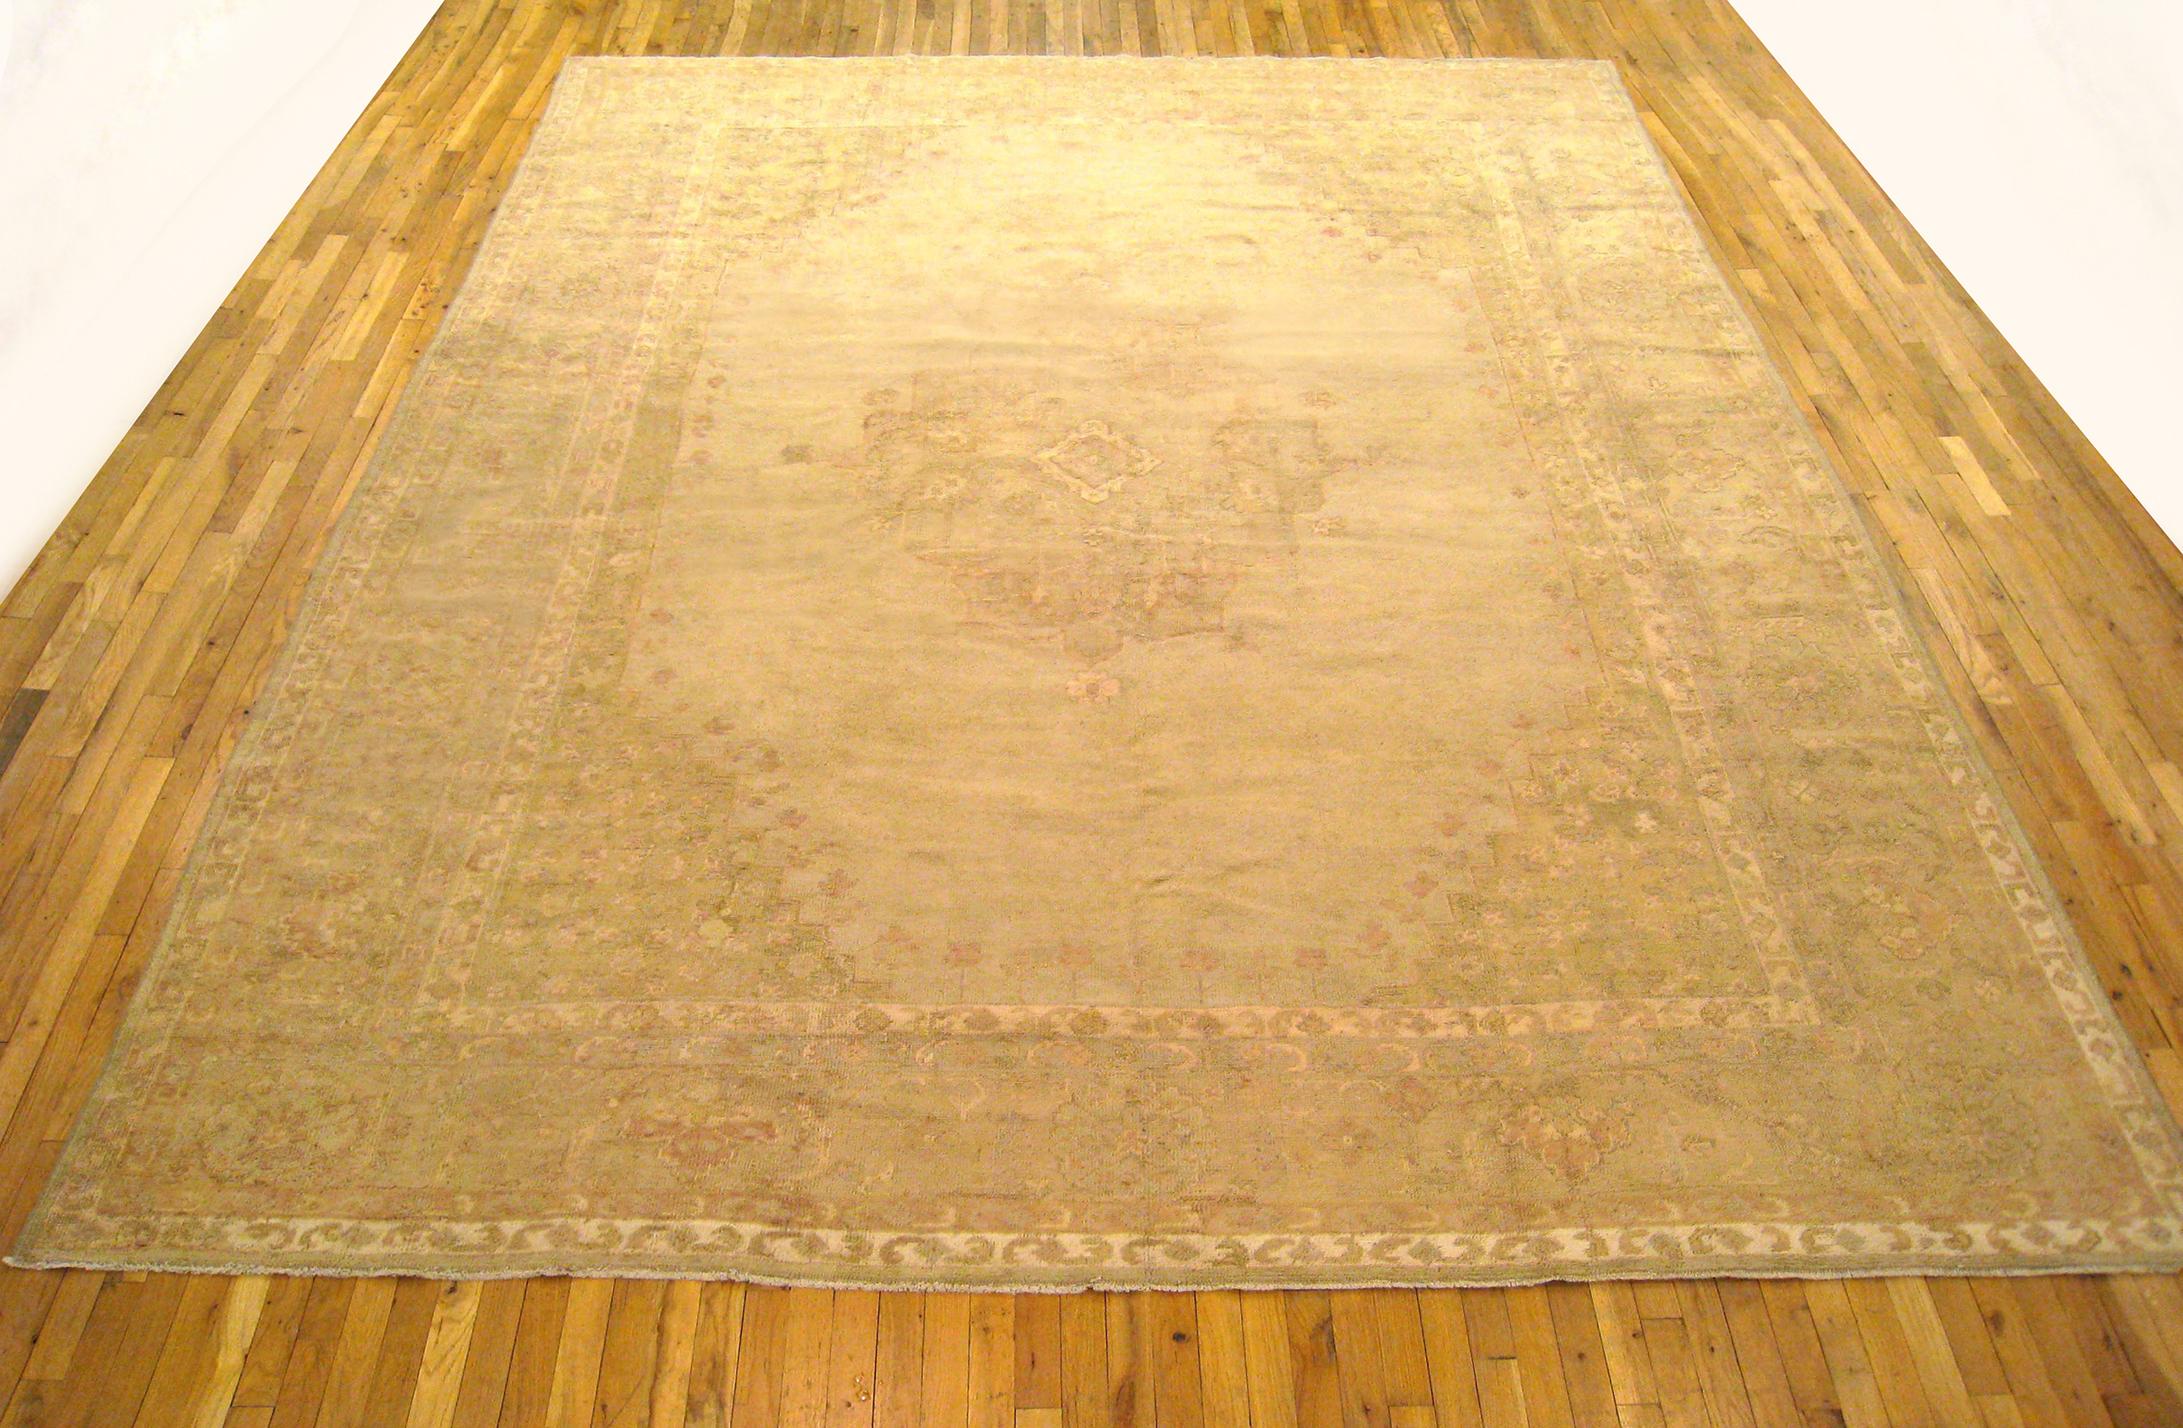 Antique Turkish Oushak Decorative Oriental Carpet, Room size, with Light brown Field

A gorgeous antique Turkish Oushak carpet, circa 1920, size 13'2